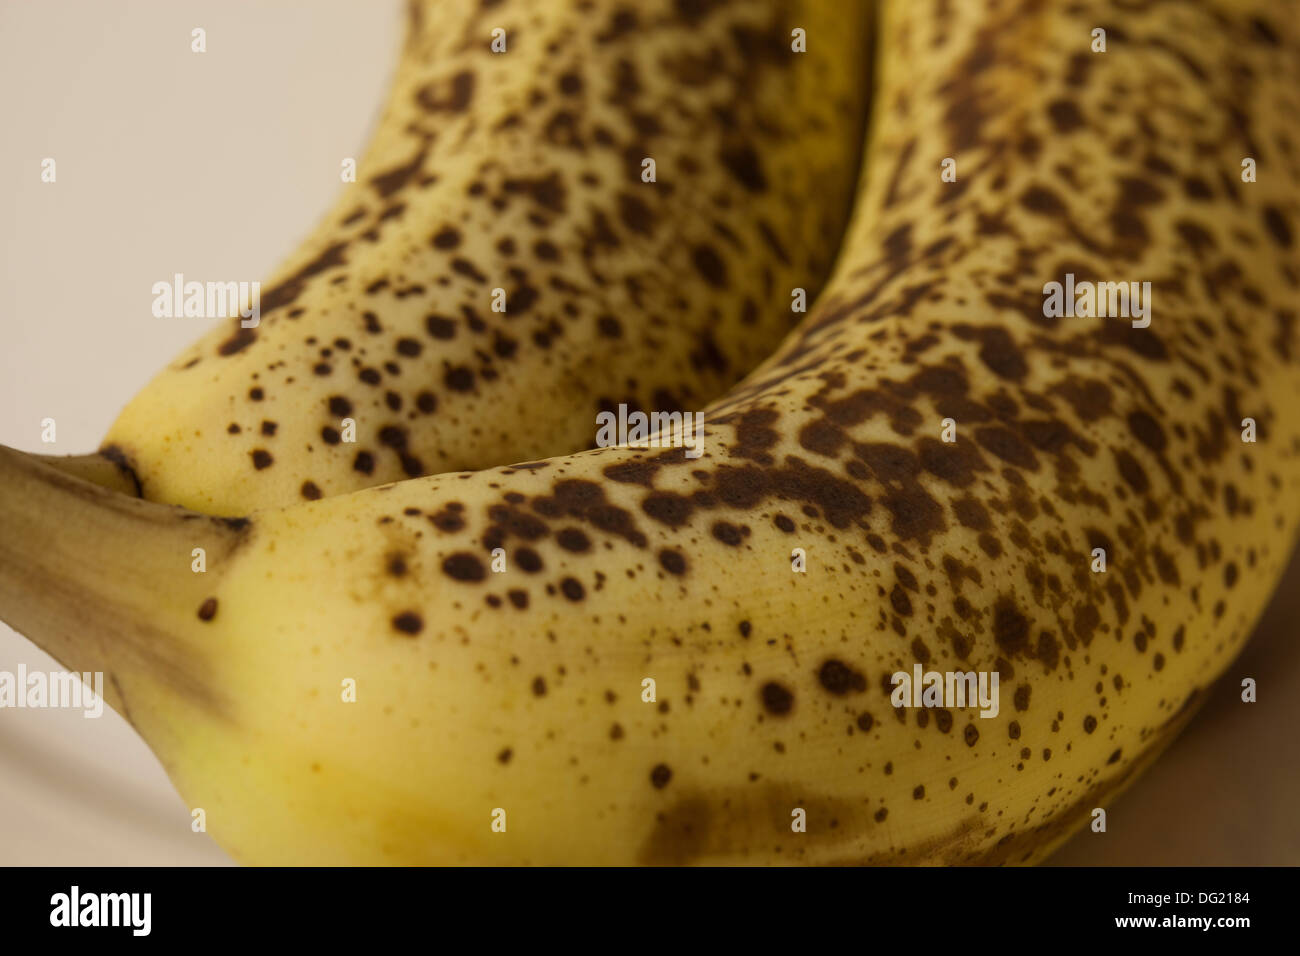 Closeup of overripe bananas  (brown spots) Stock Photo